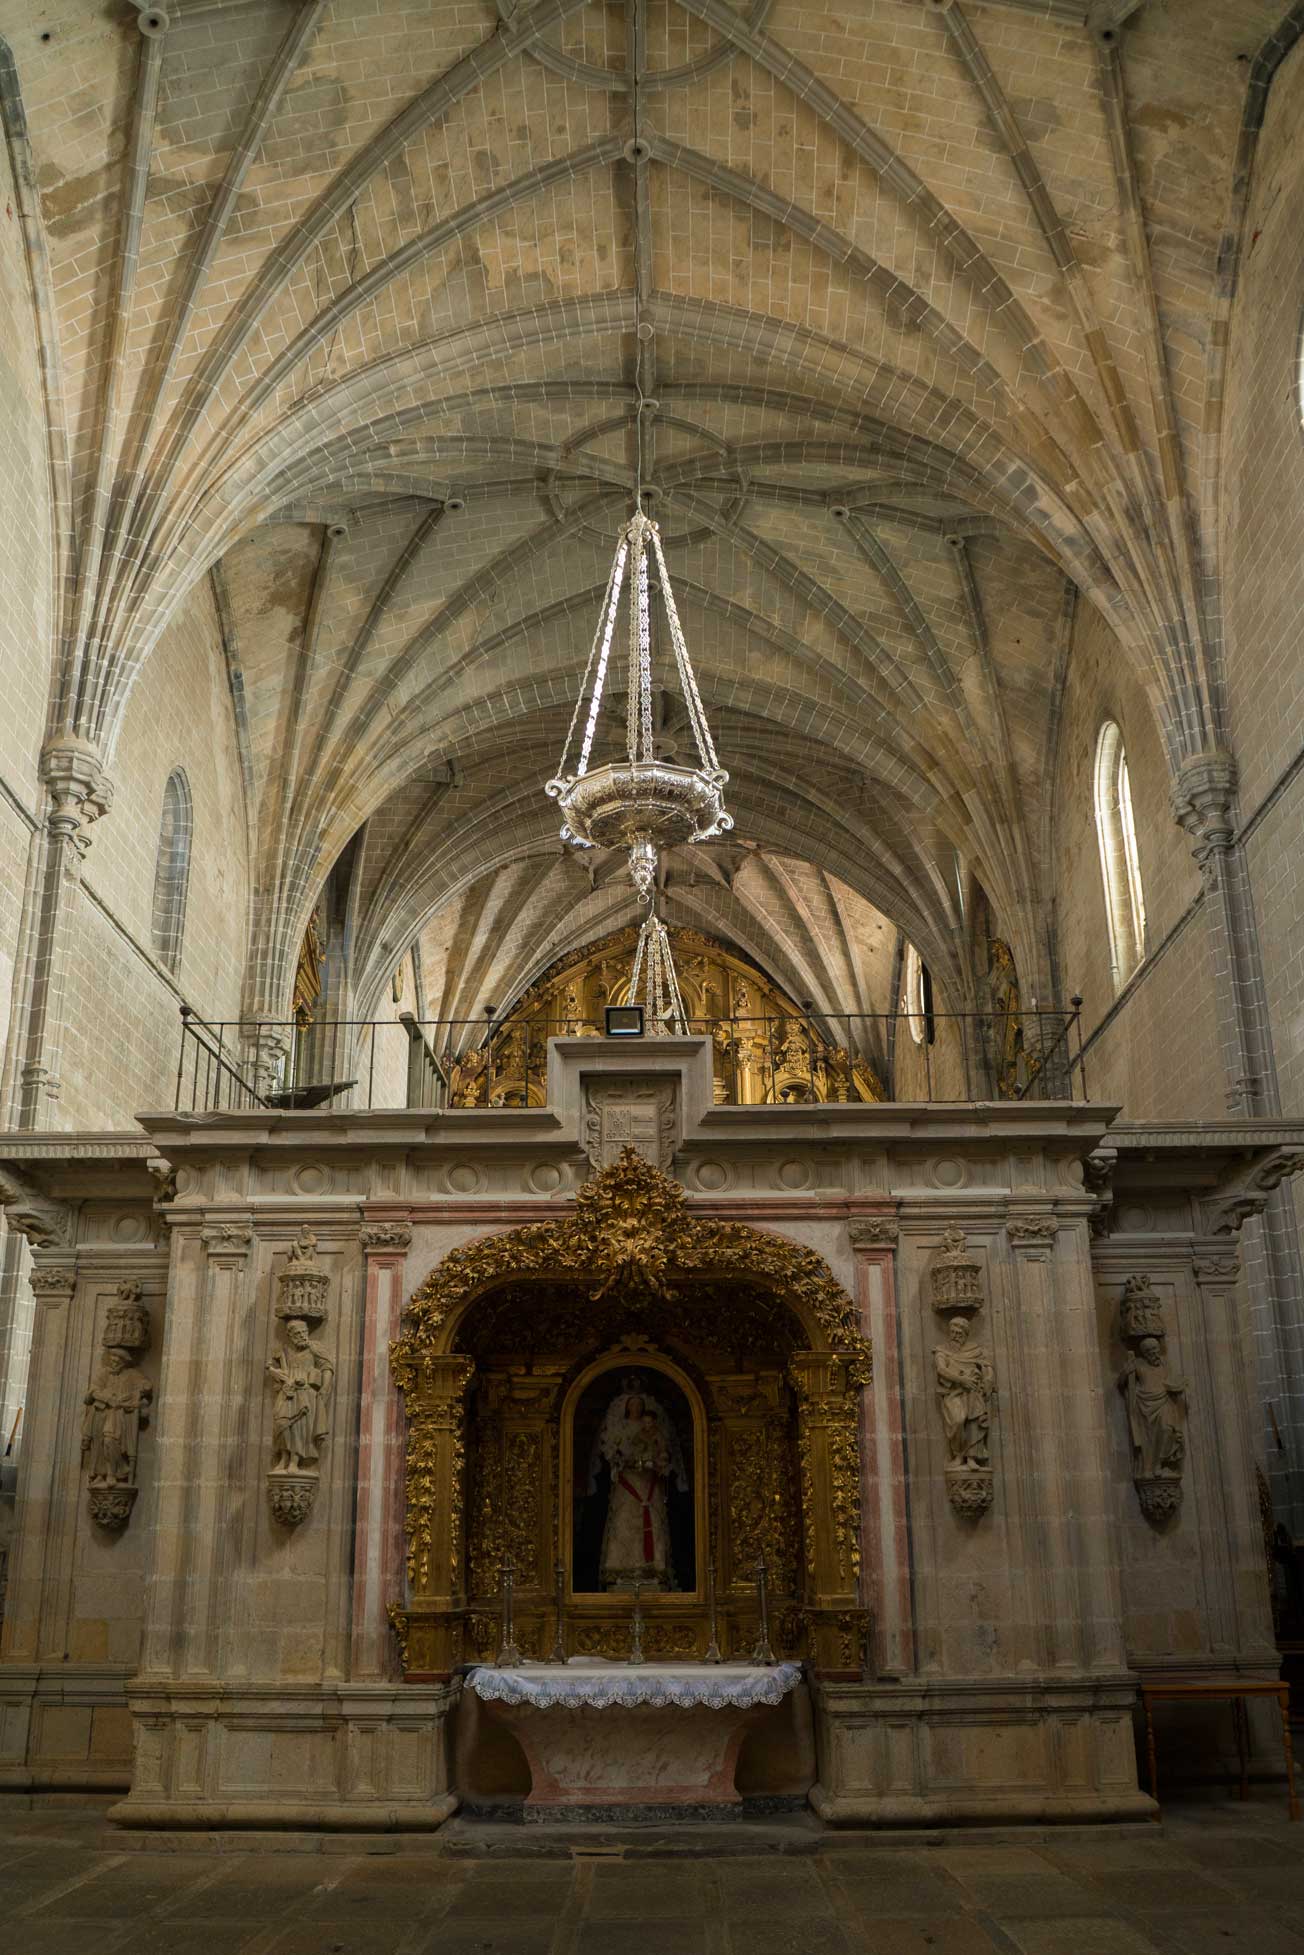 Transcoro with altarpiece of the Virgen del Rosario